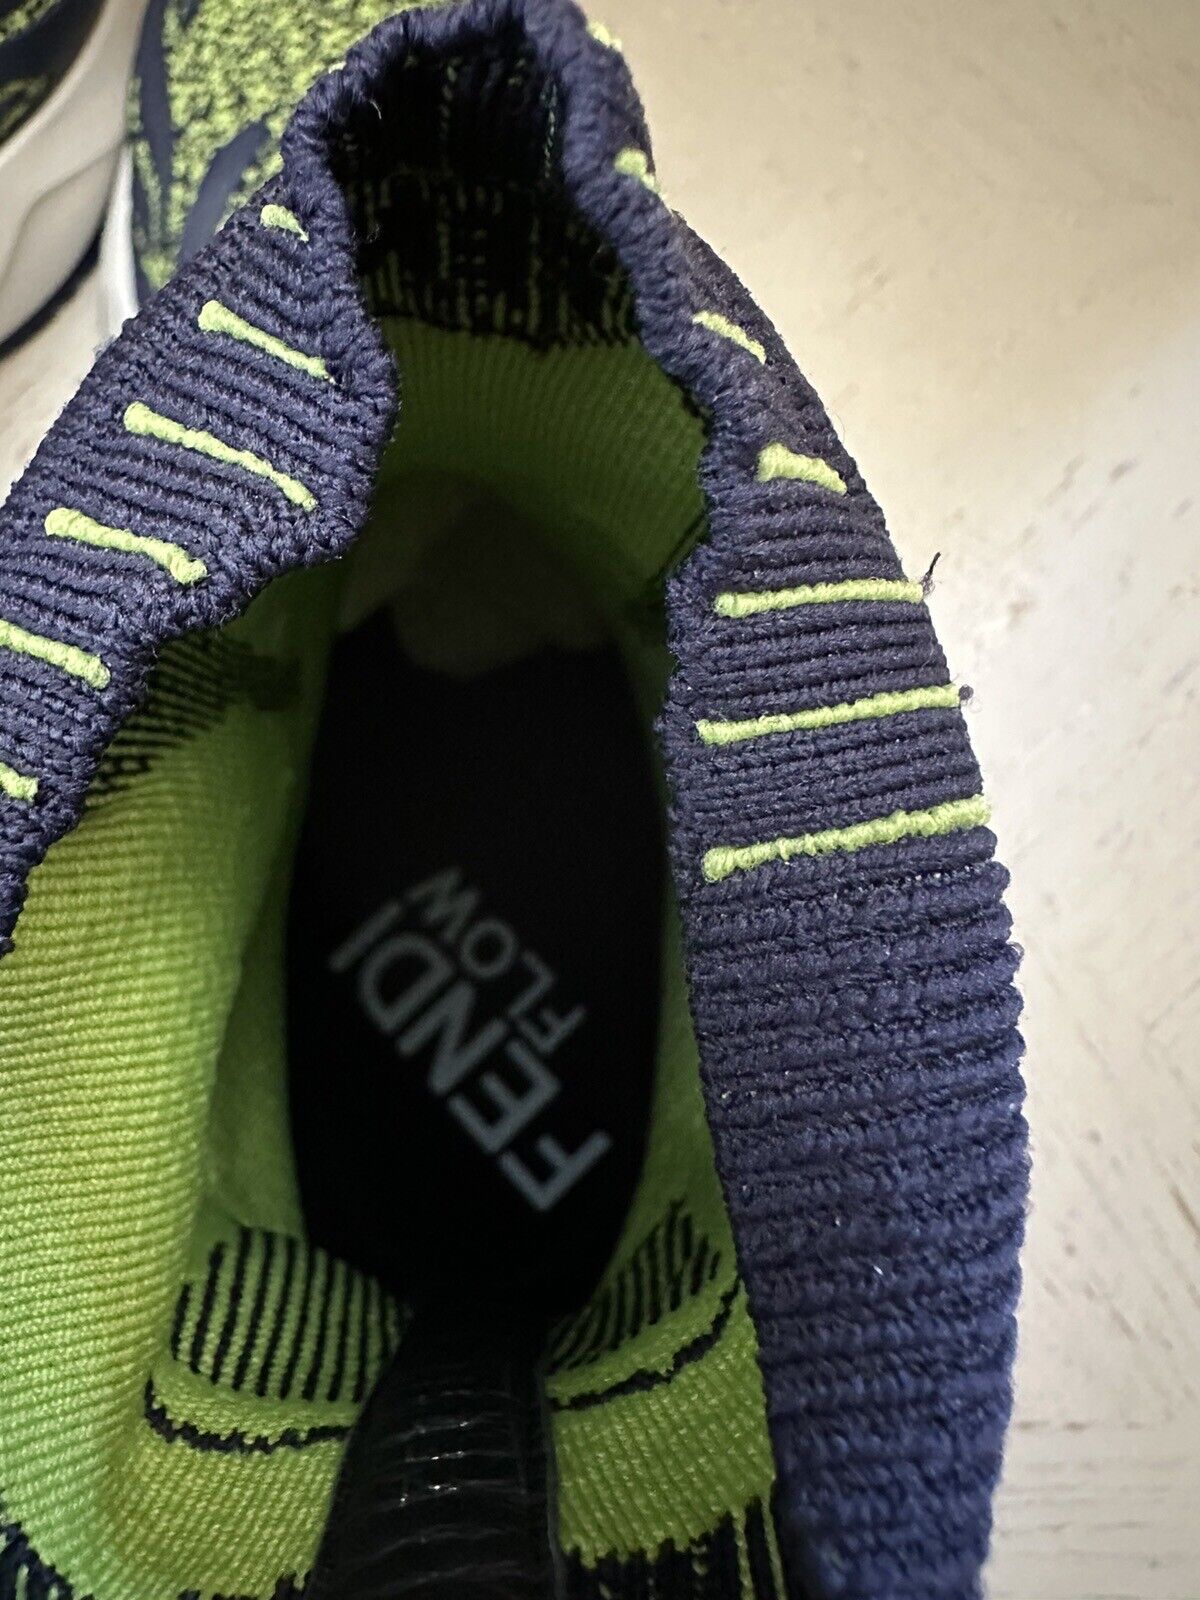 NIB 1190 долларов США Fendi Contrast Knit High Top кроссовки Темно-синий/зеленый 11 US/10 UK